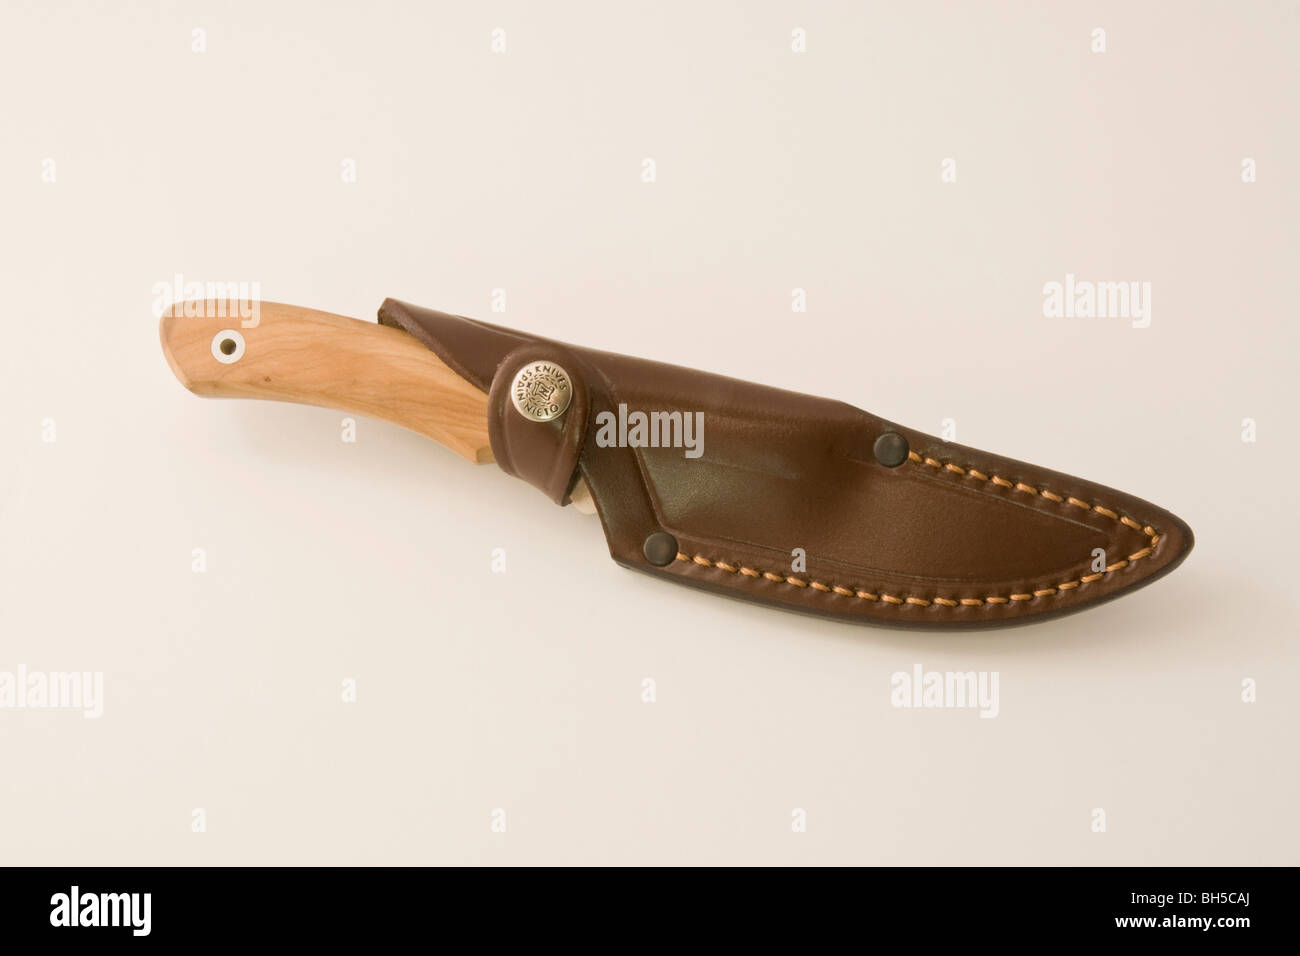 Bowe Knife in sheath Stock Photo